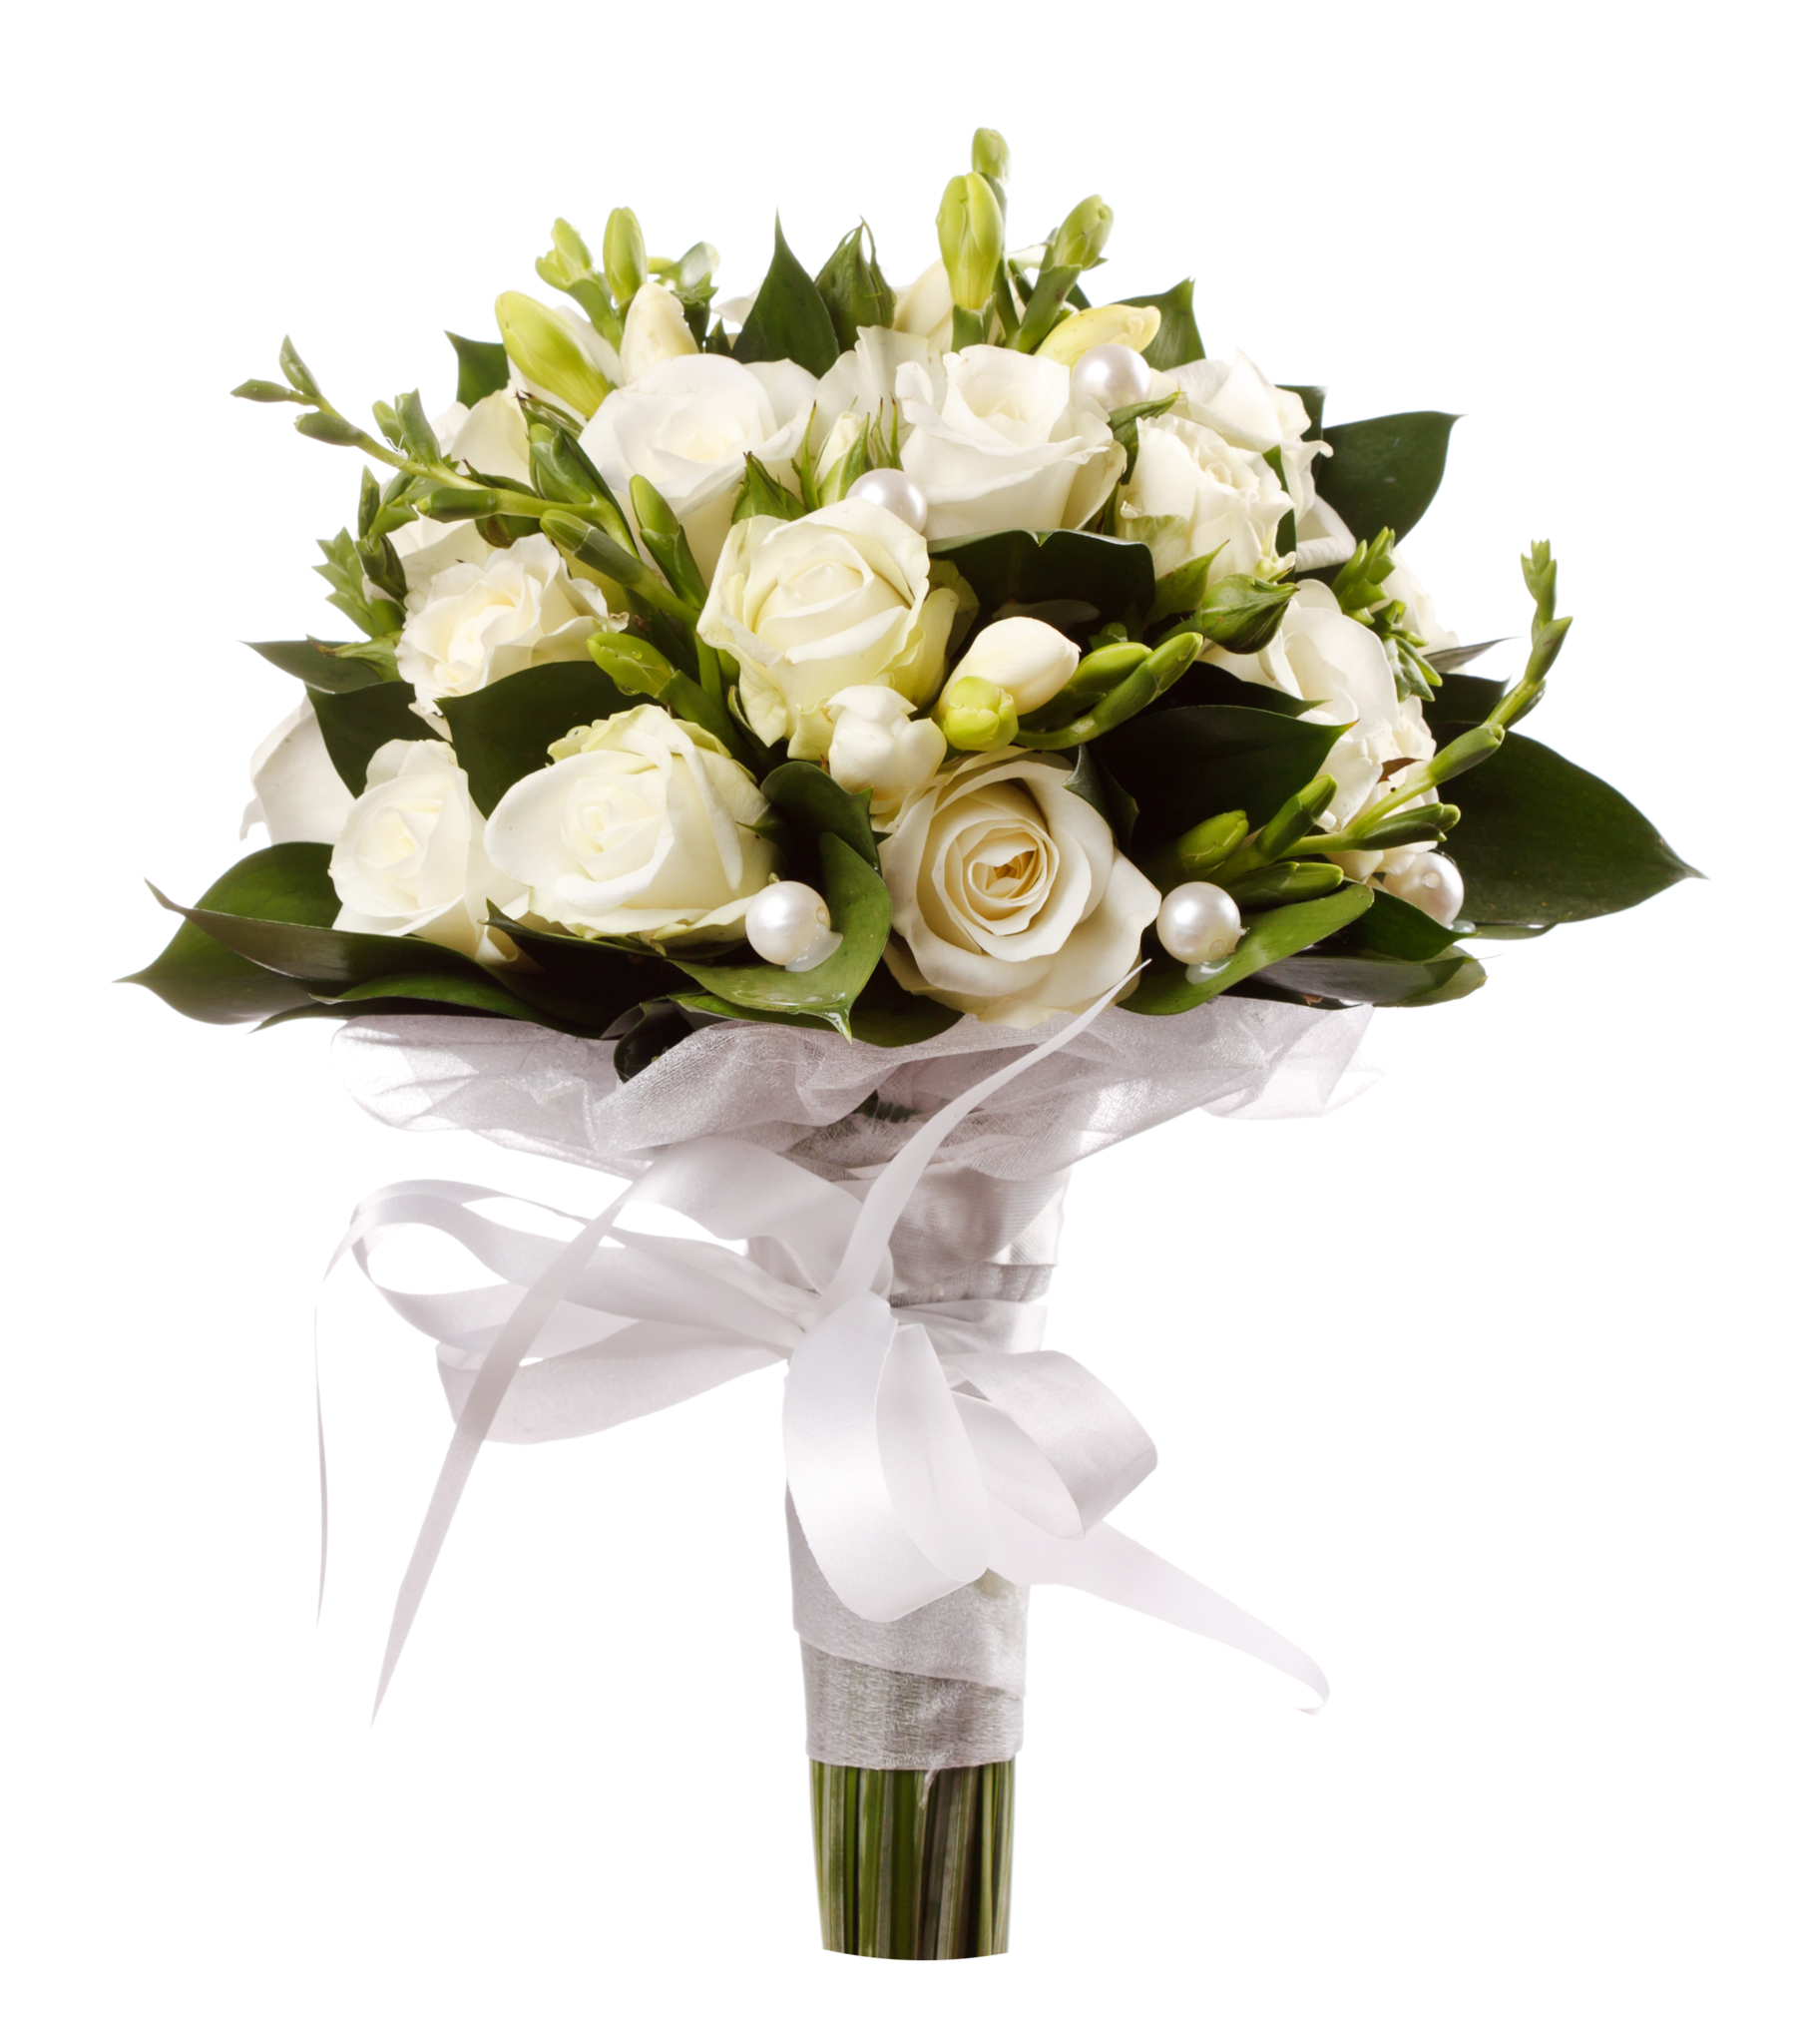 Wedding Flower bouquet Bride - Wedding flowers PNG png download - 1806*2048 - Free Transparent